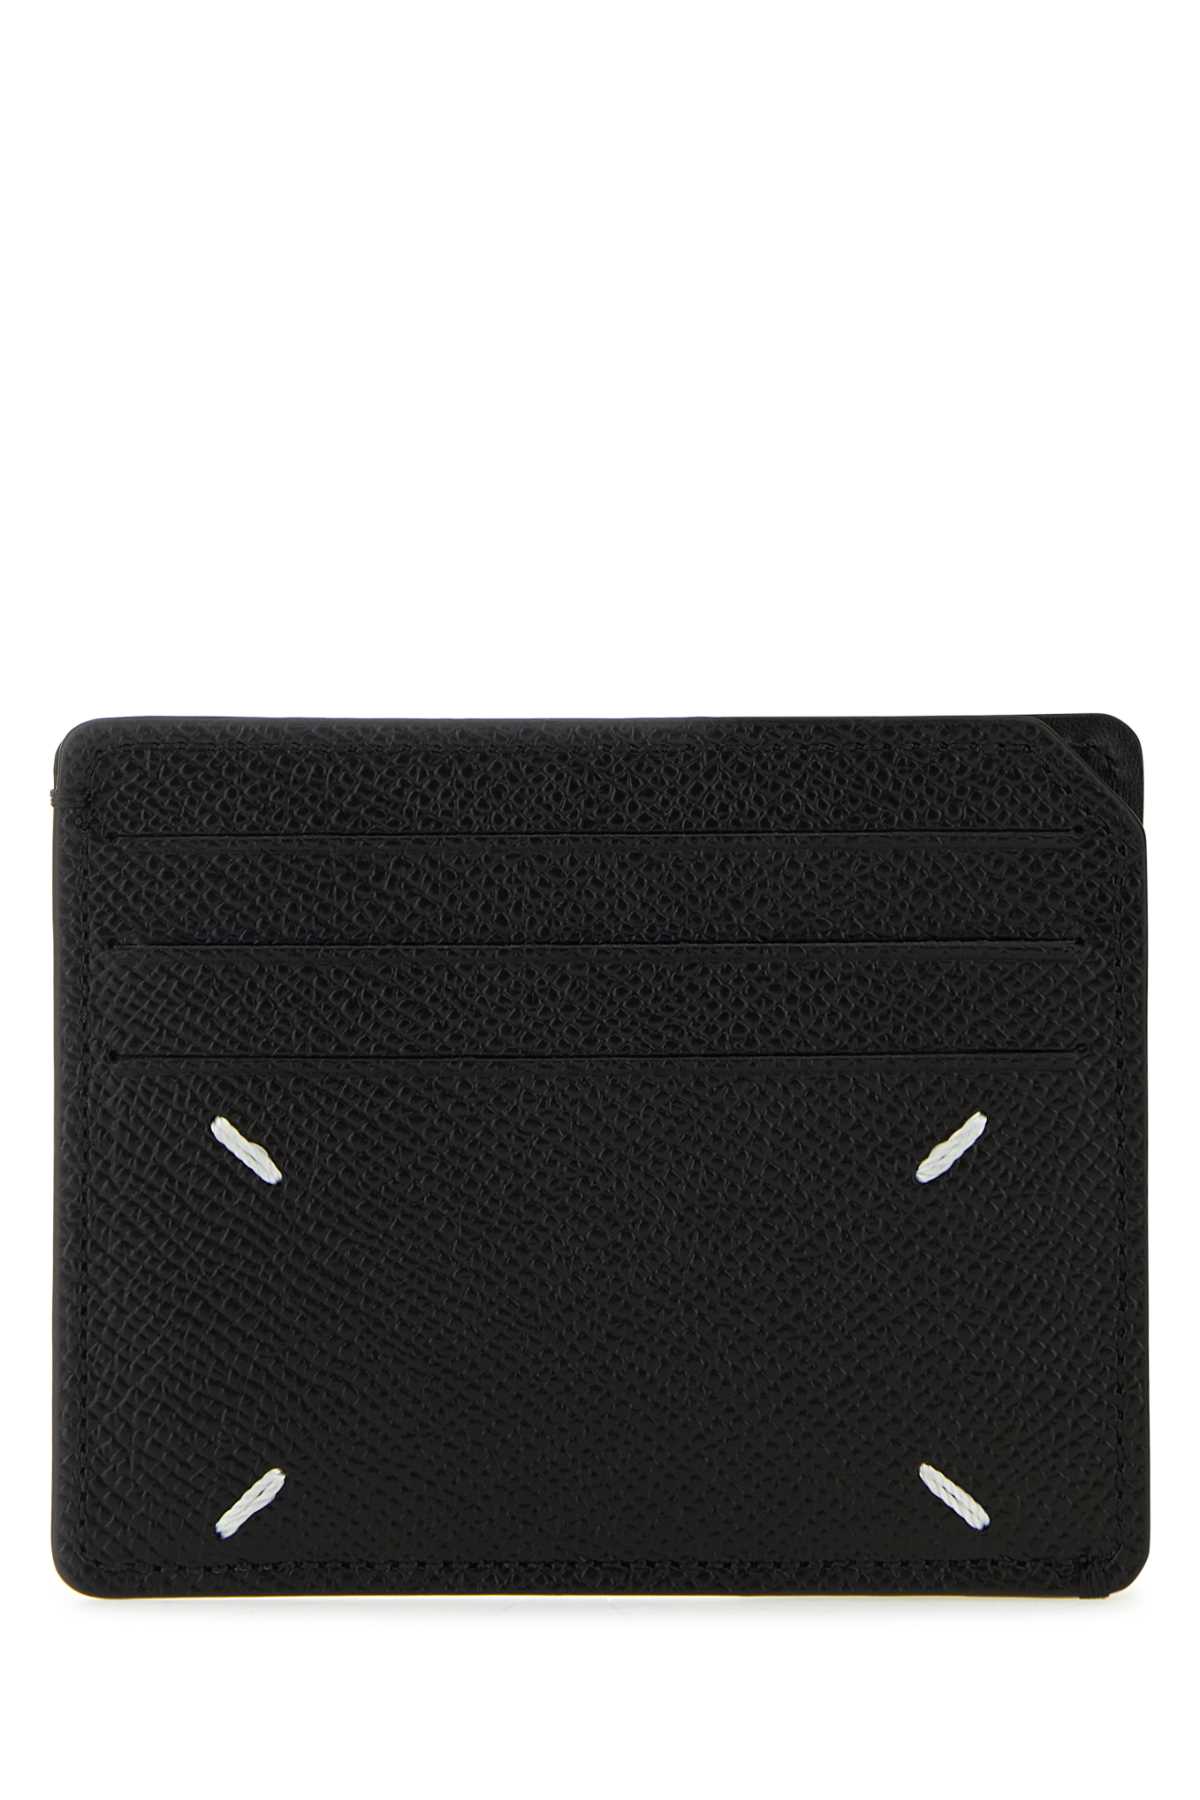 Shop Maison Margiela Black Leather Four Stitches Card Holder